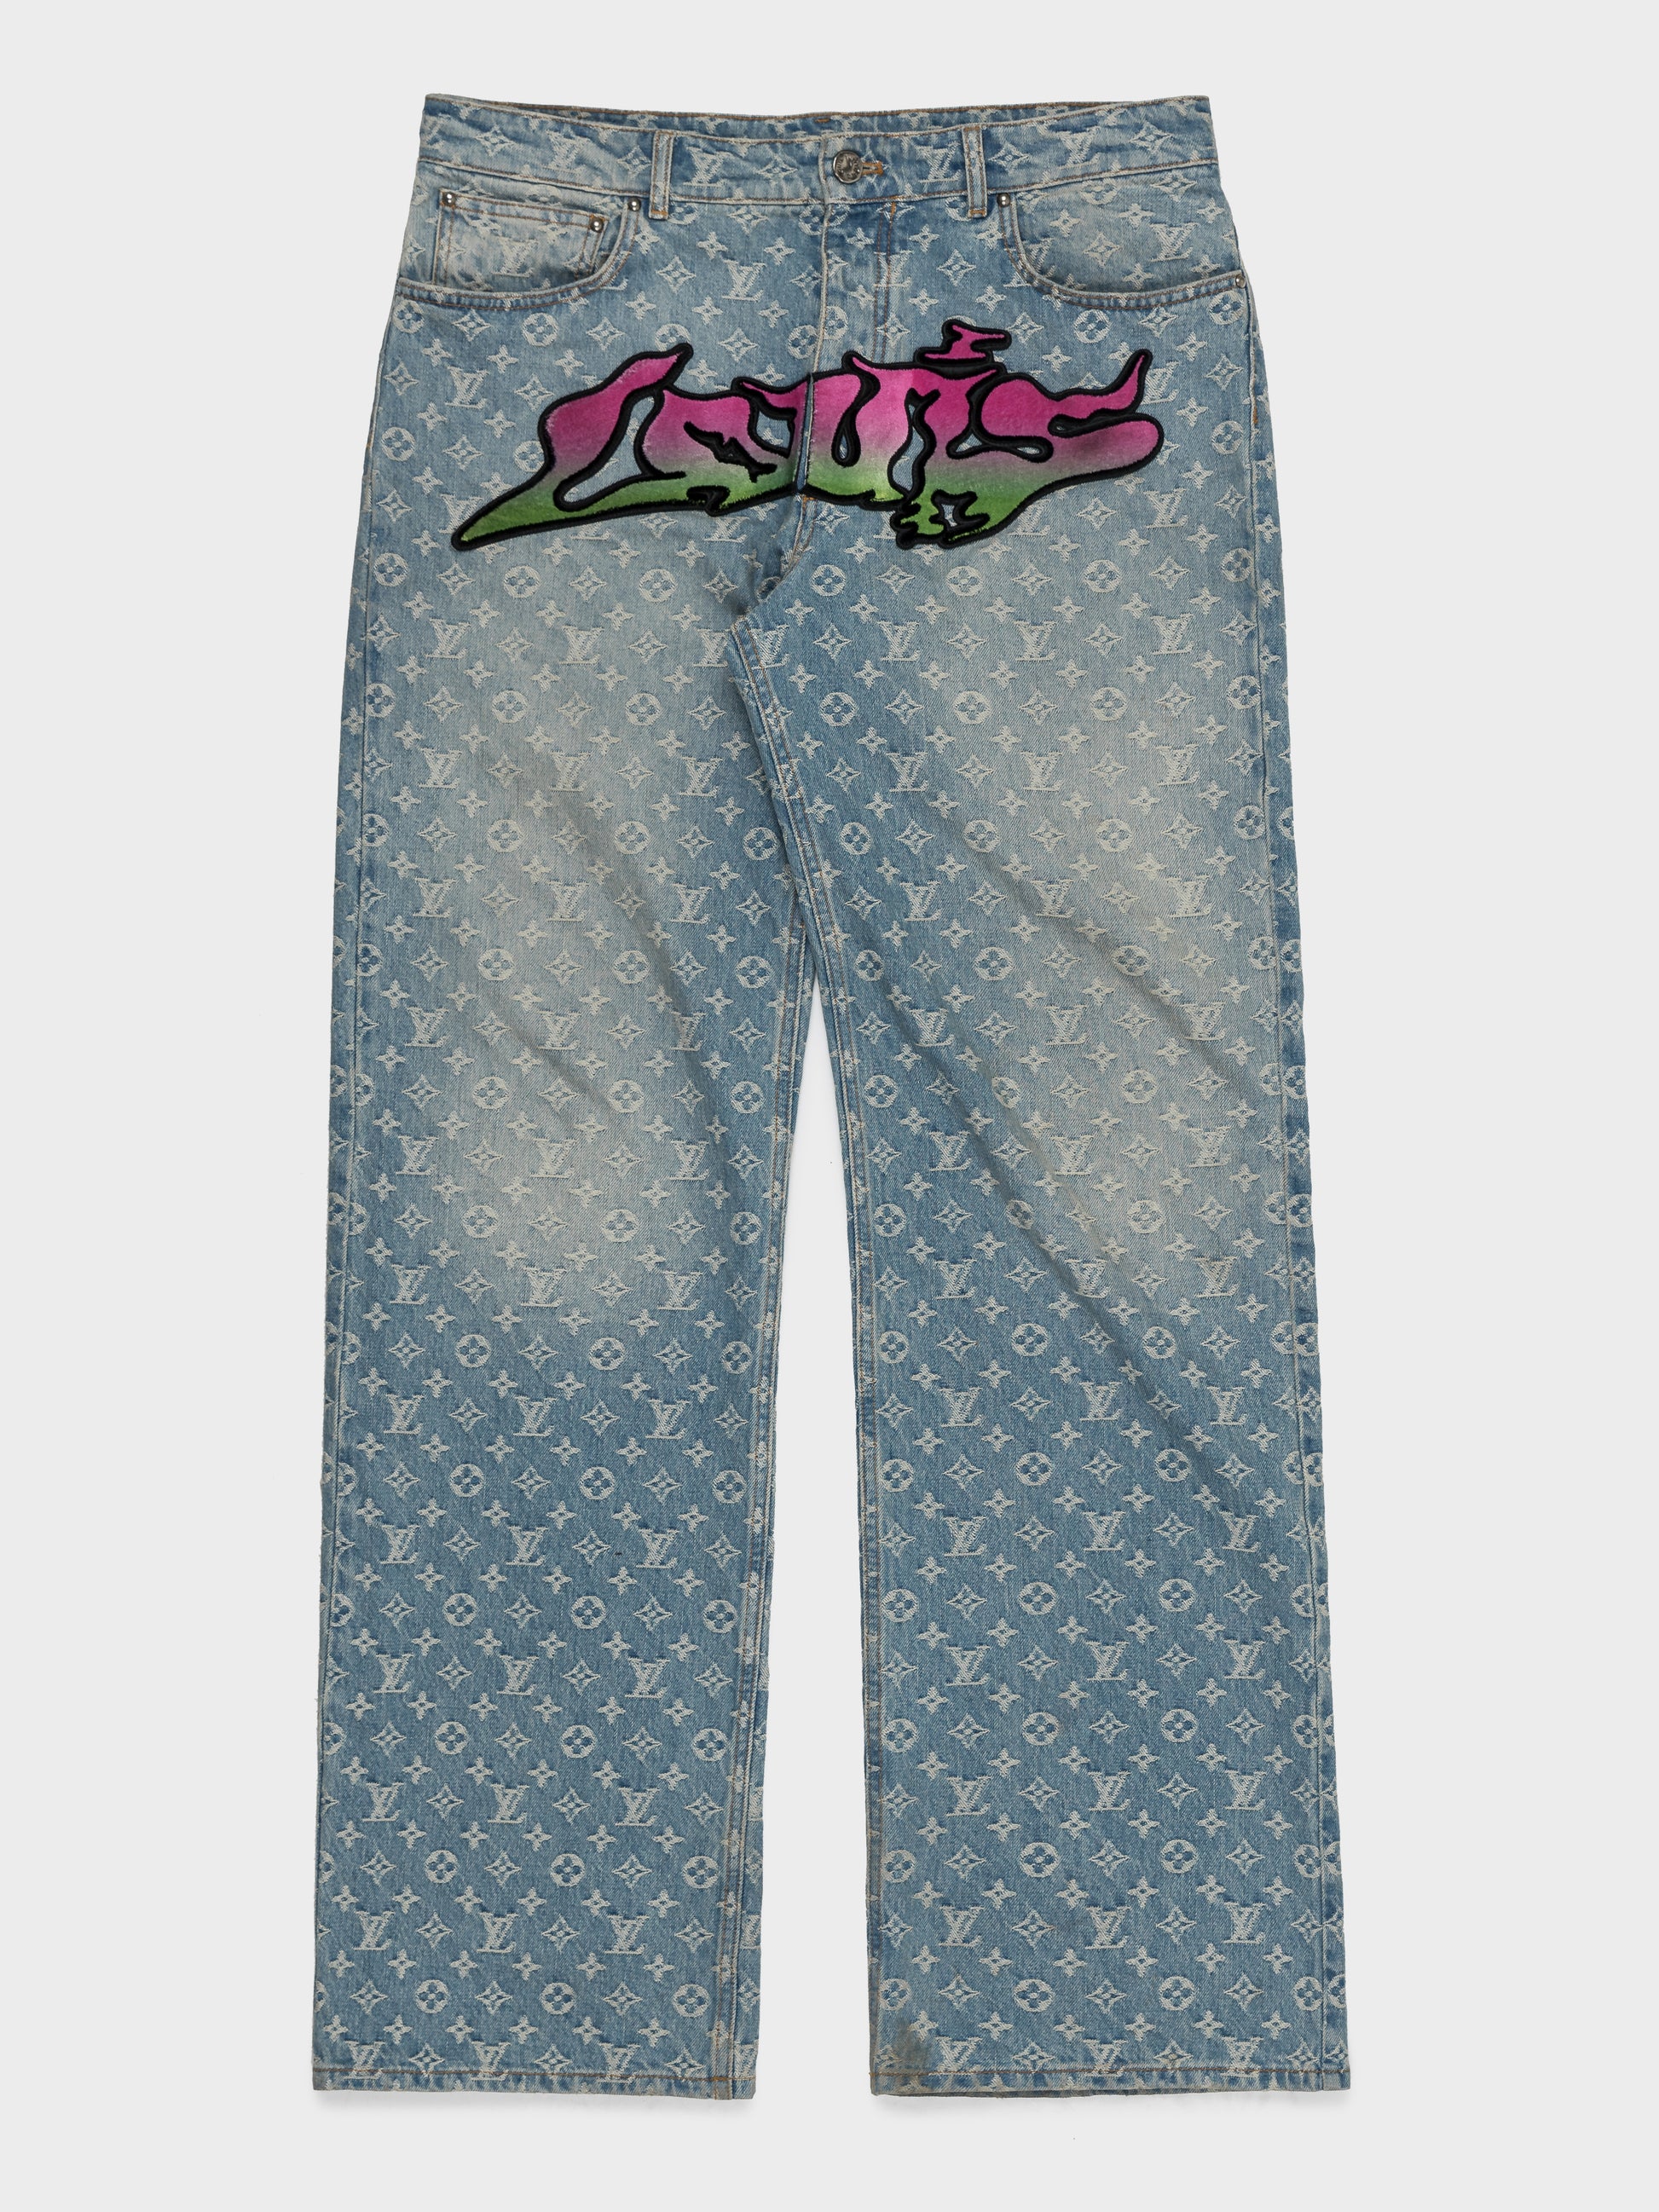 vuitton graffiti jeans